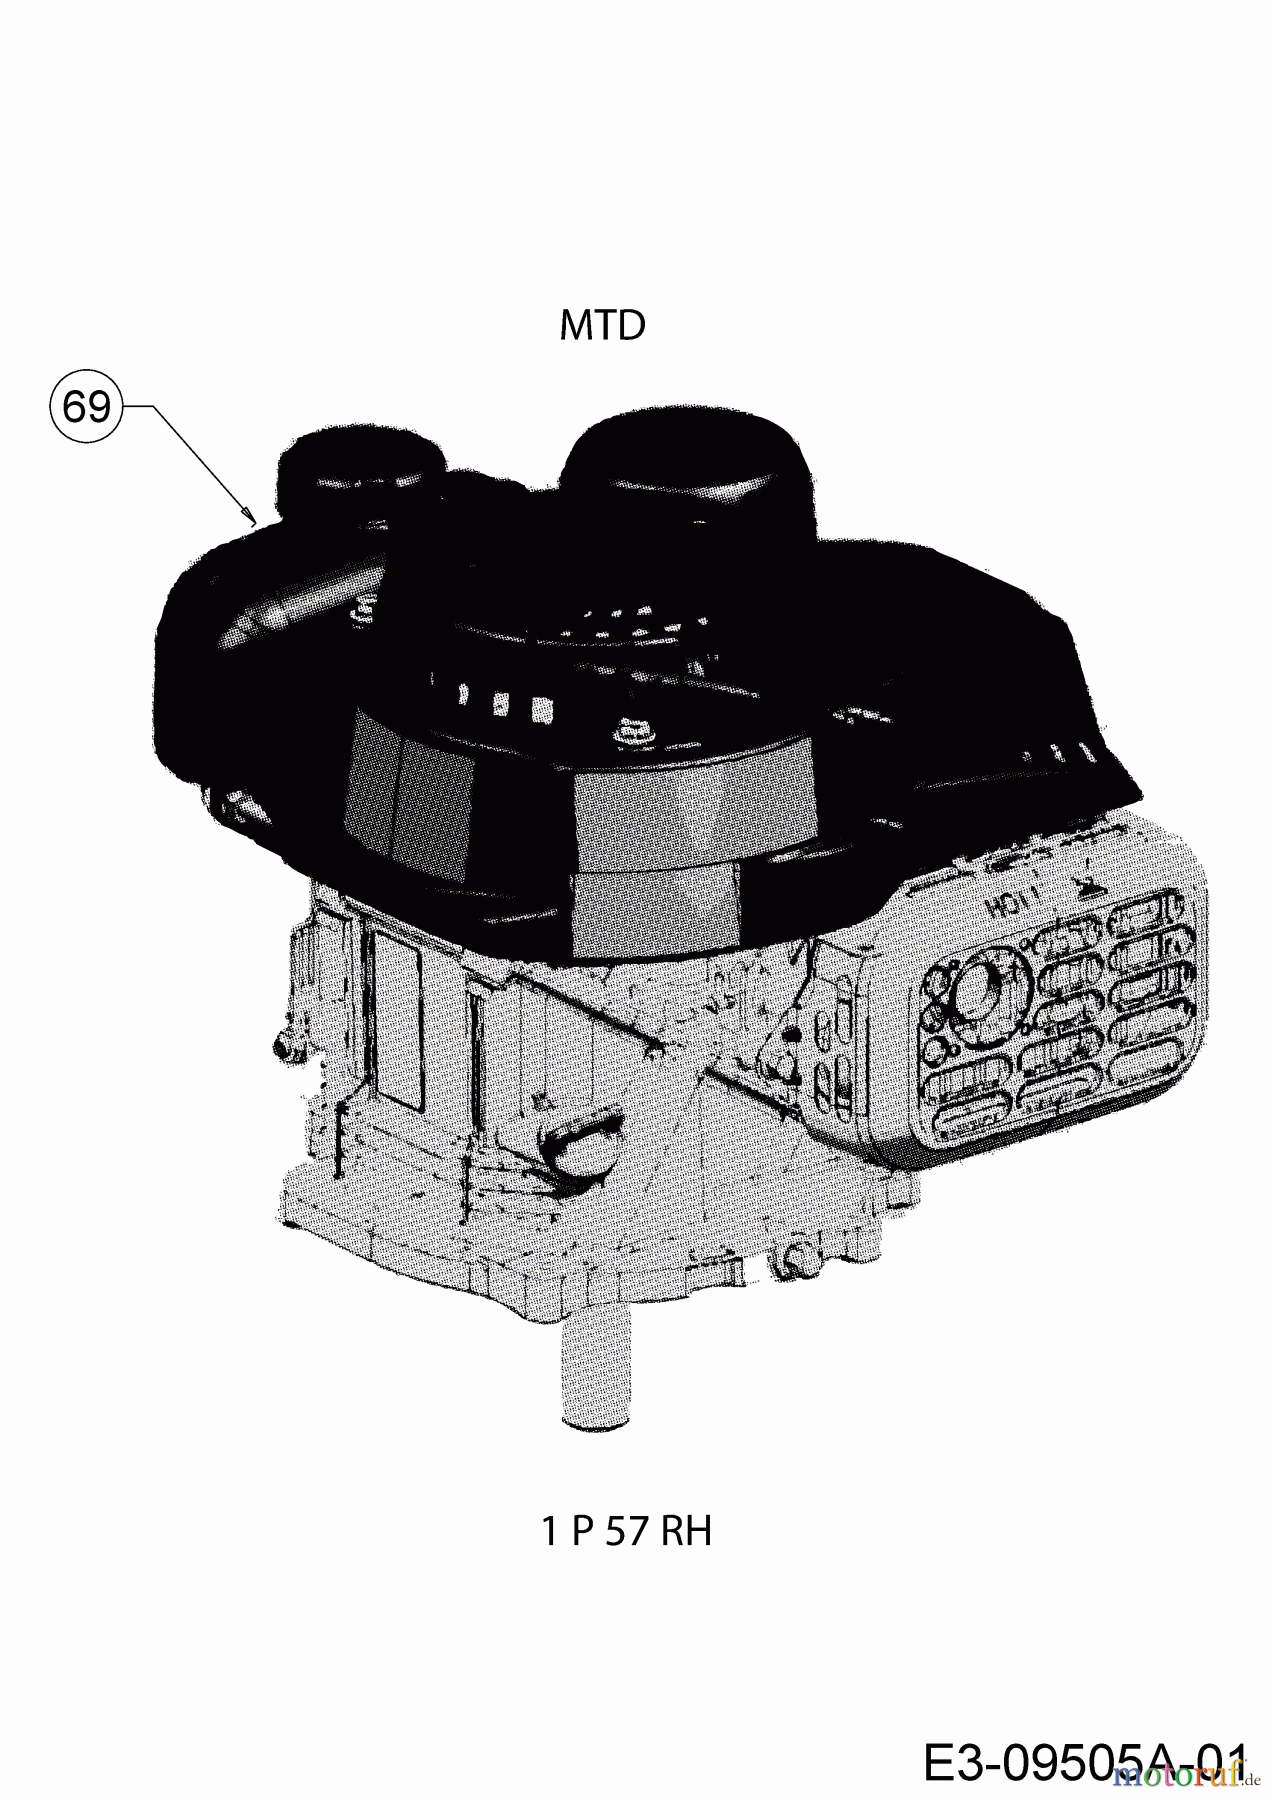  MTD Motormäher Smart G 46 MO 11E-70SJ600 (2019) Motor MTD